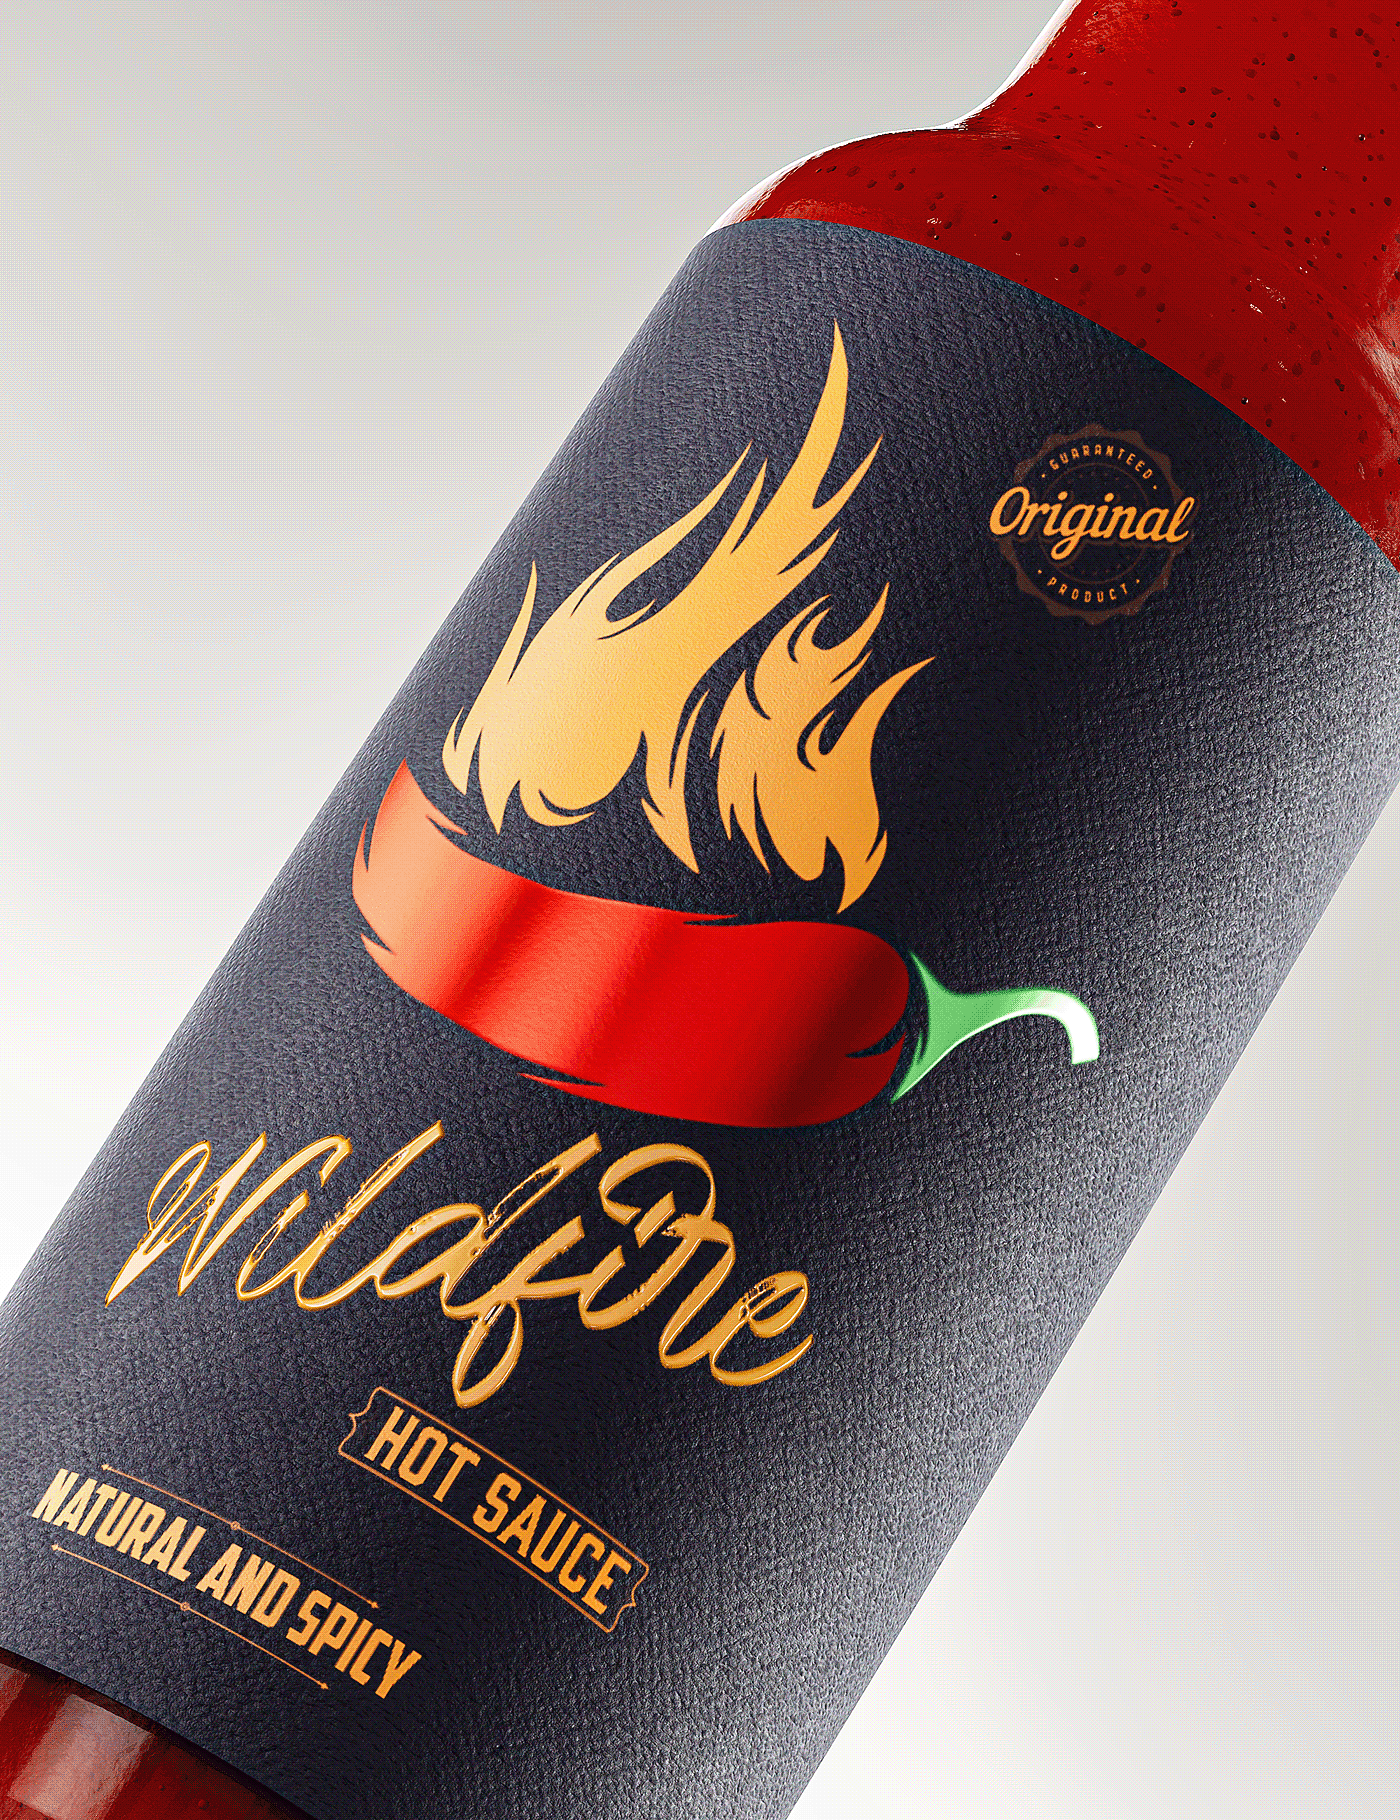 Wildfire Hot Sauce，包装，创意，产品设计，